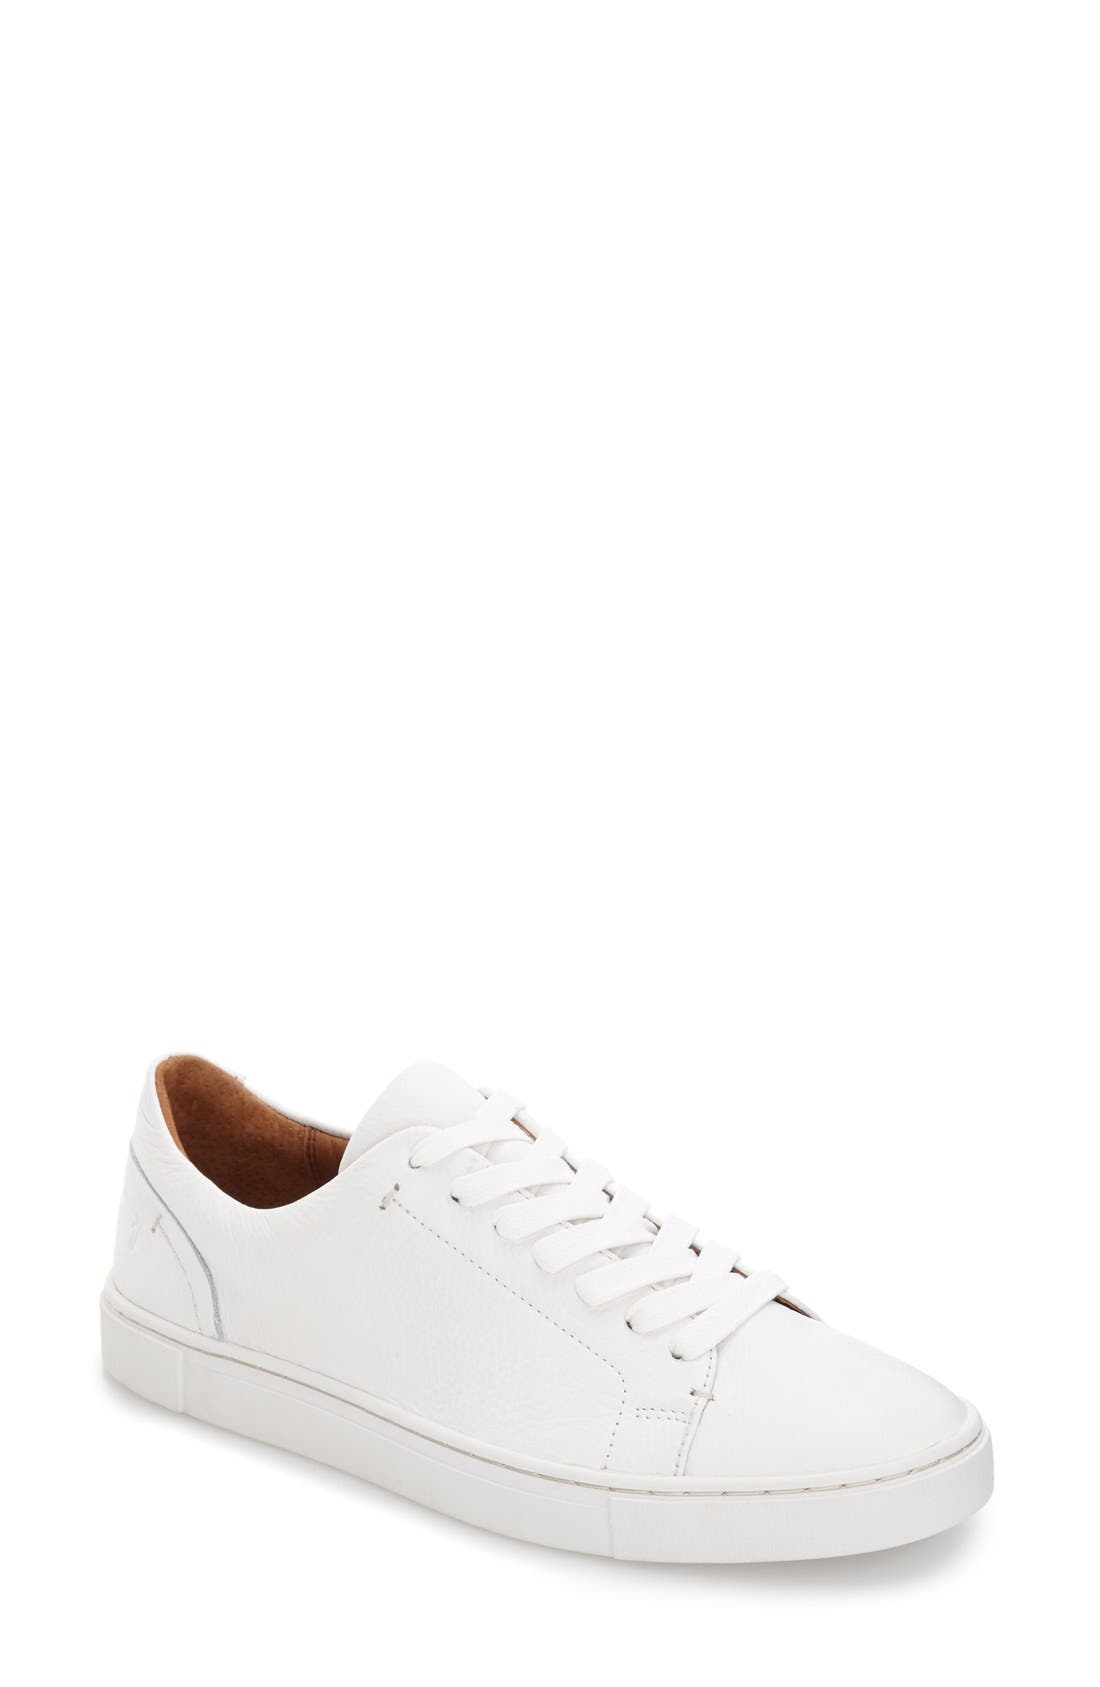 white frye sneakers